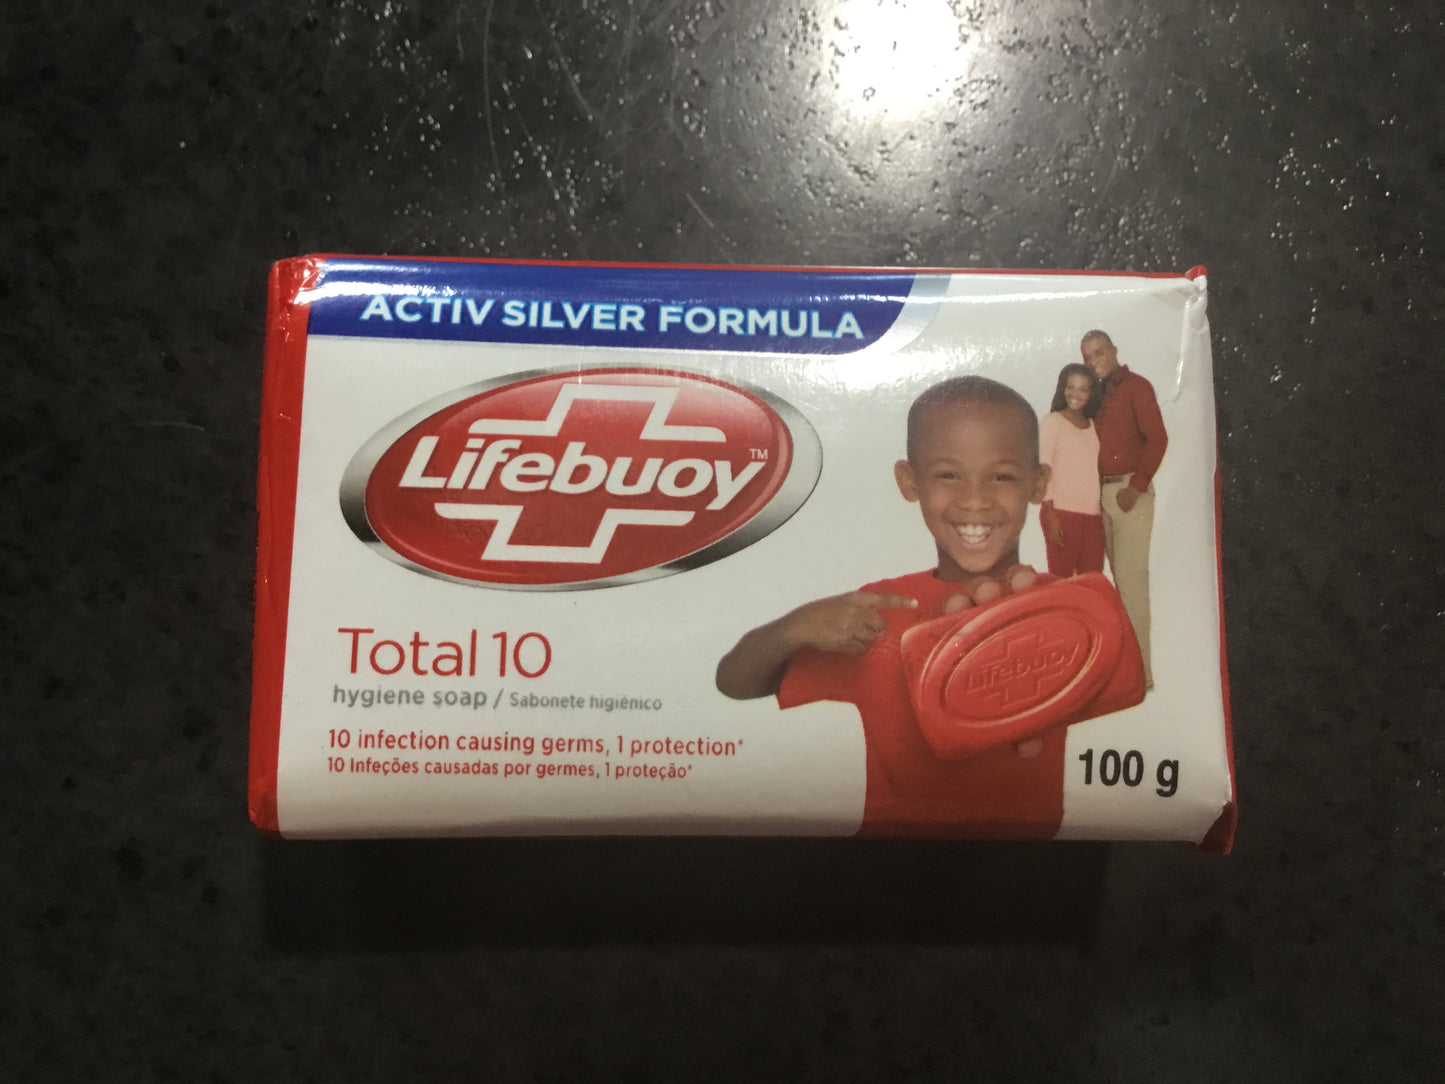 Lifebuoy Total 100g bar